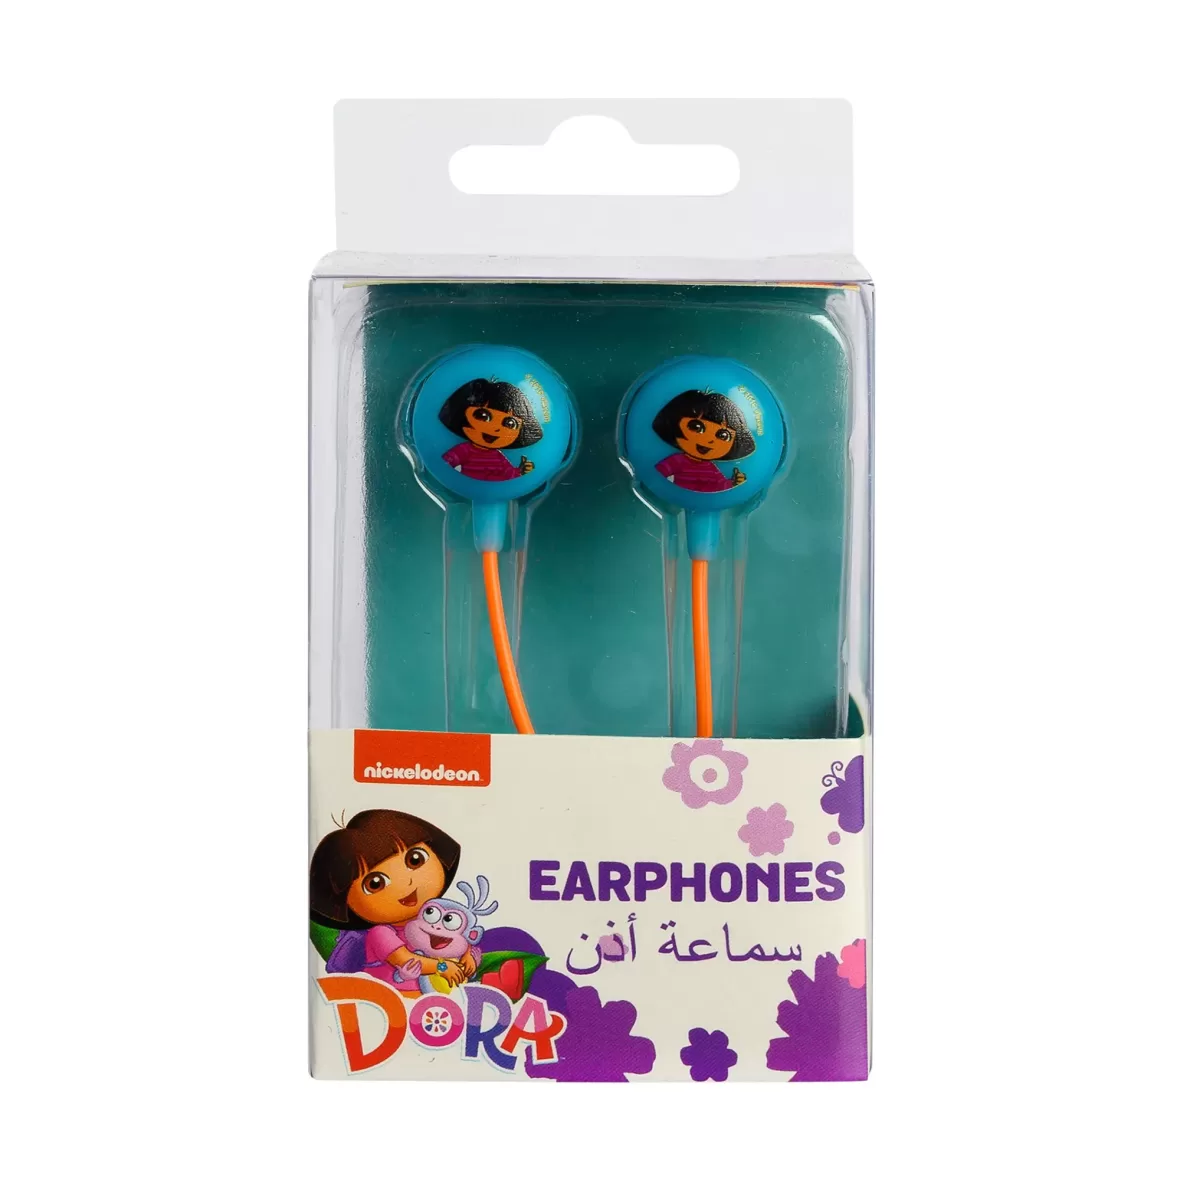 Dora the Explorer Ear Phones